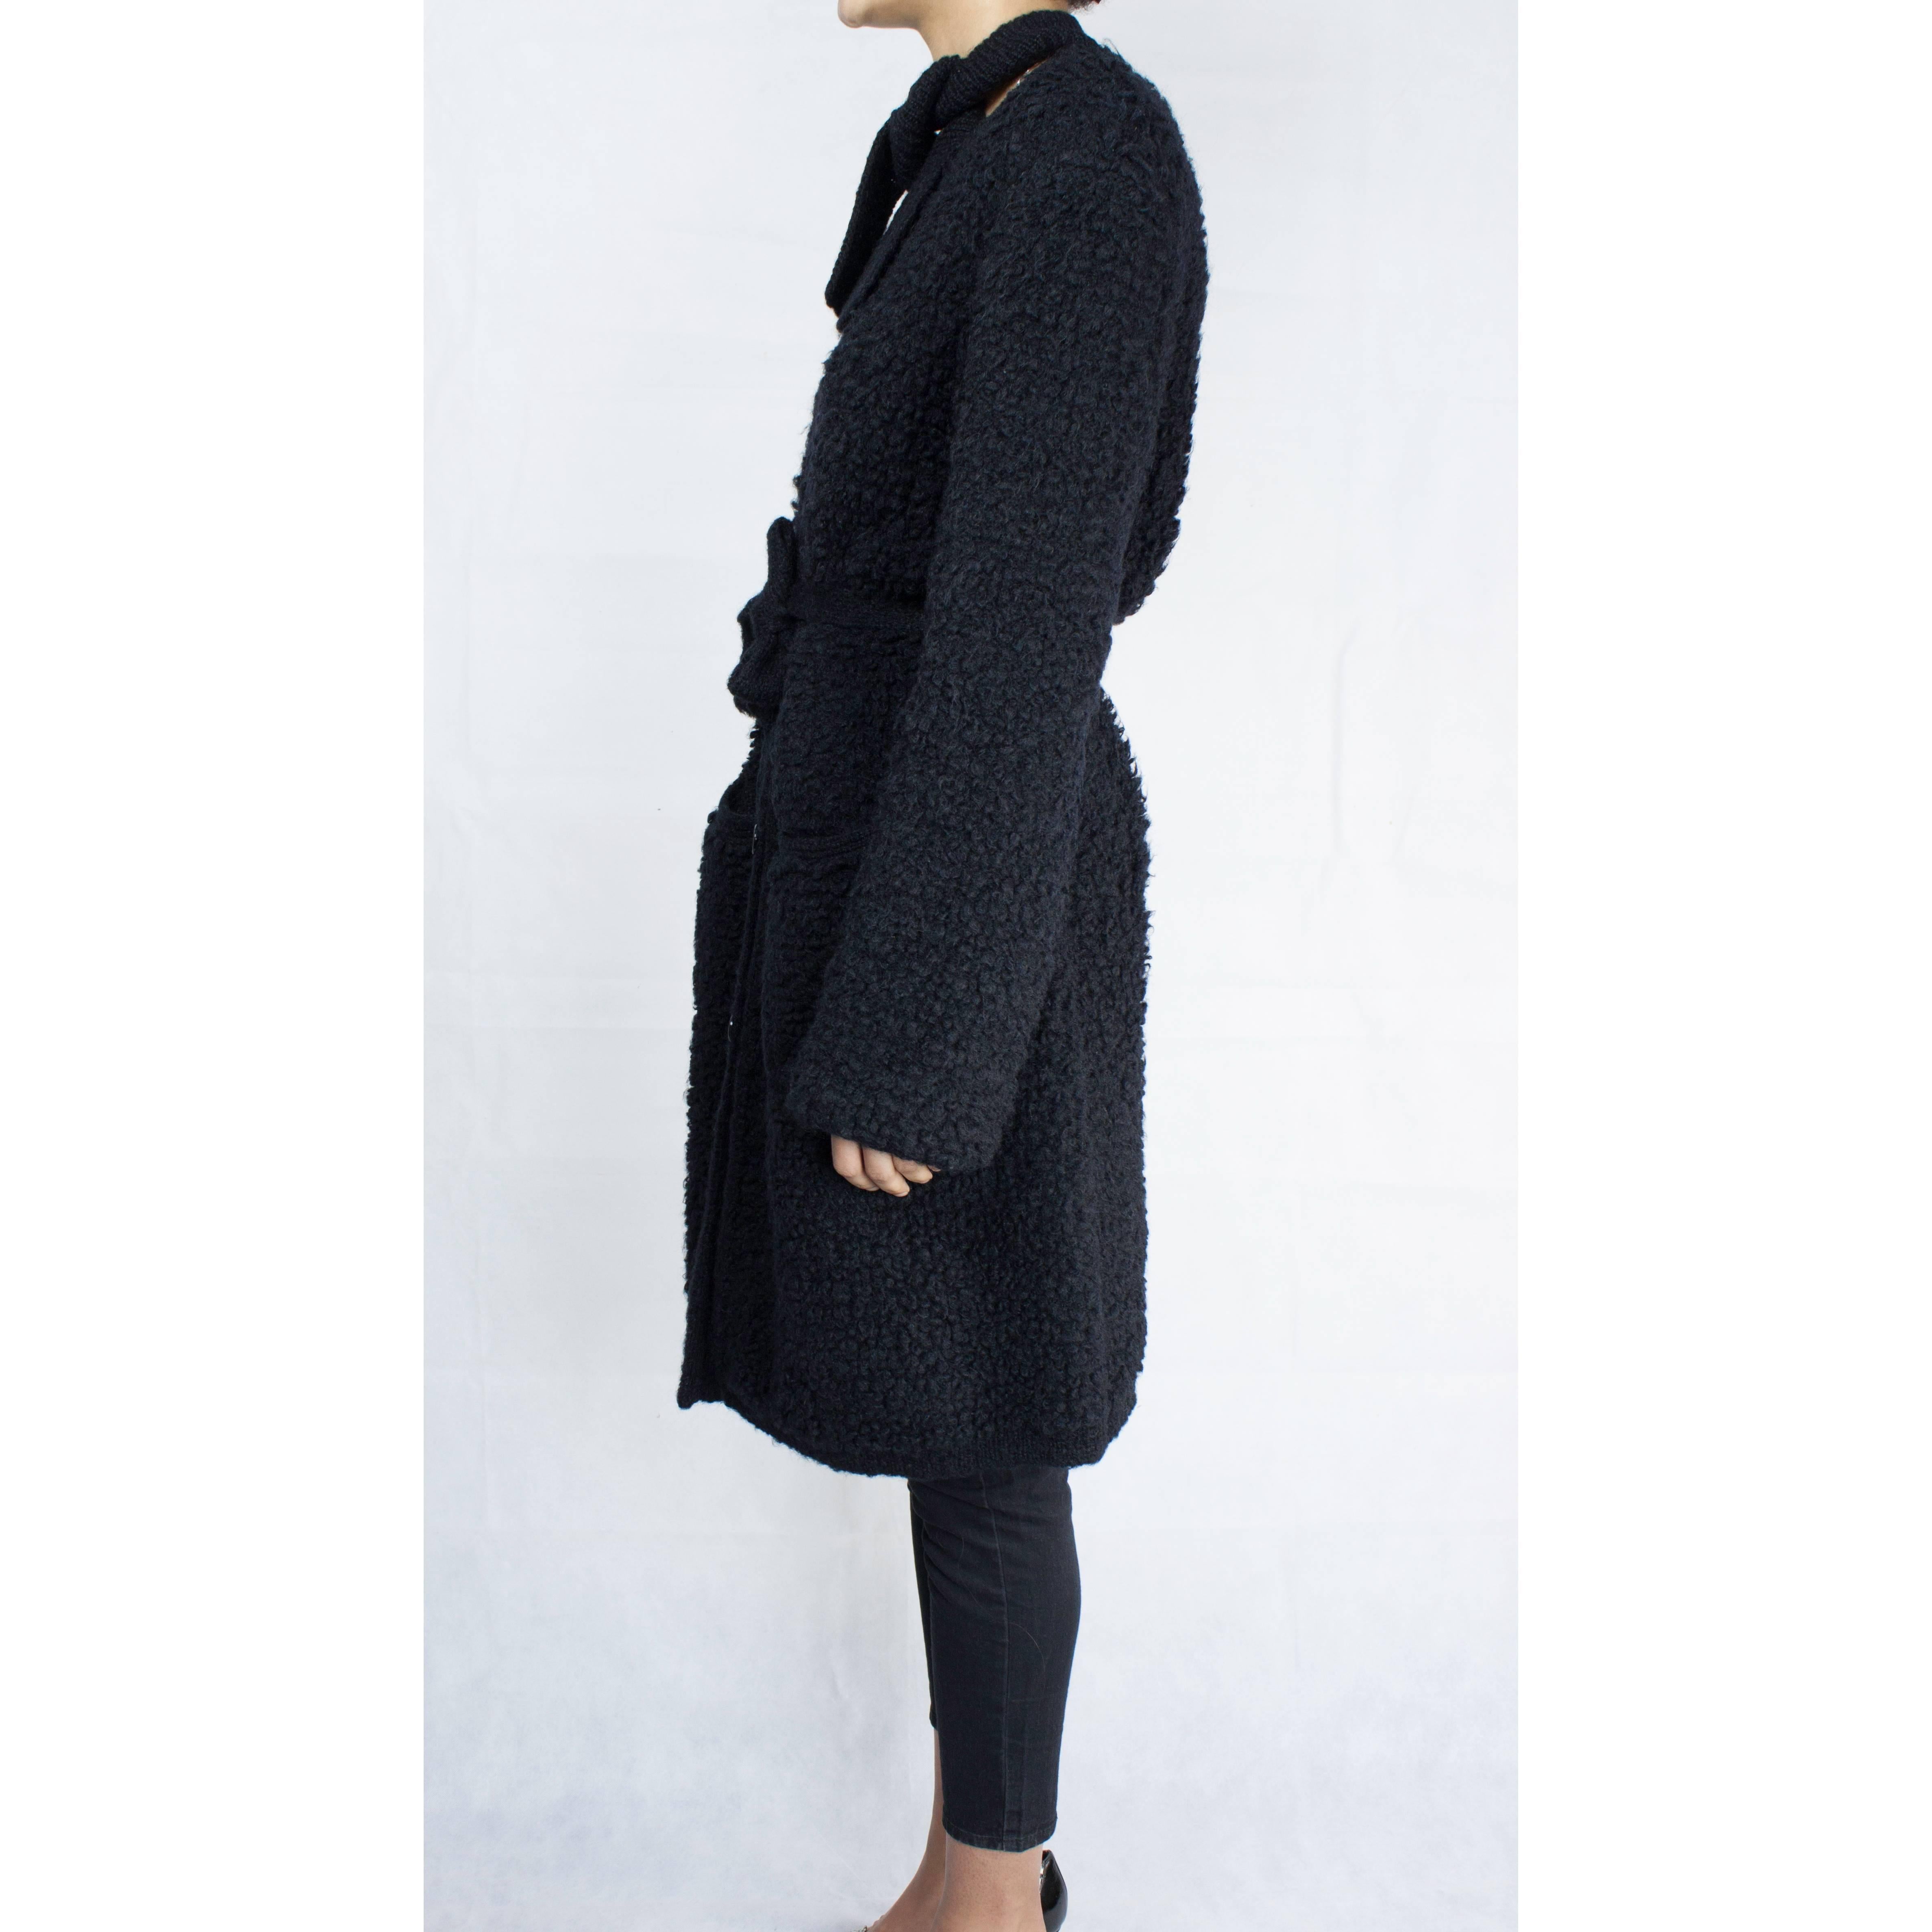 Black Important Sonia Rykiel knitted black wool coat, circa 1960s